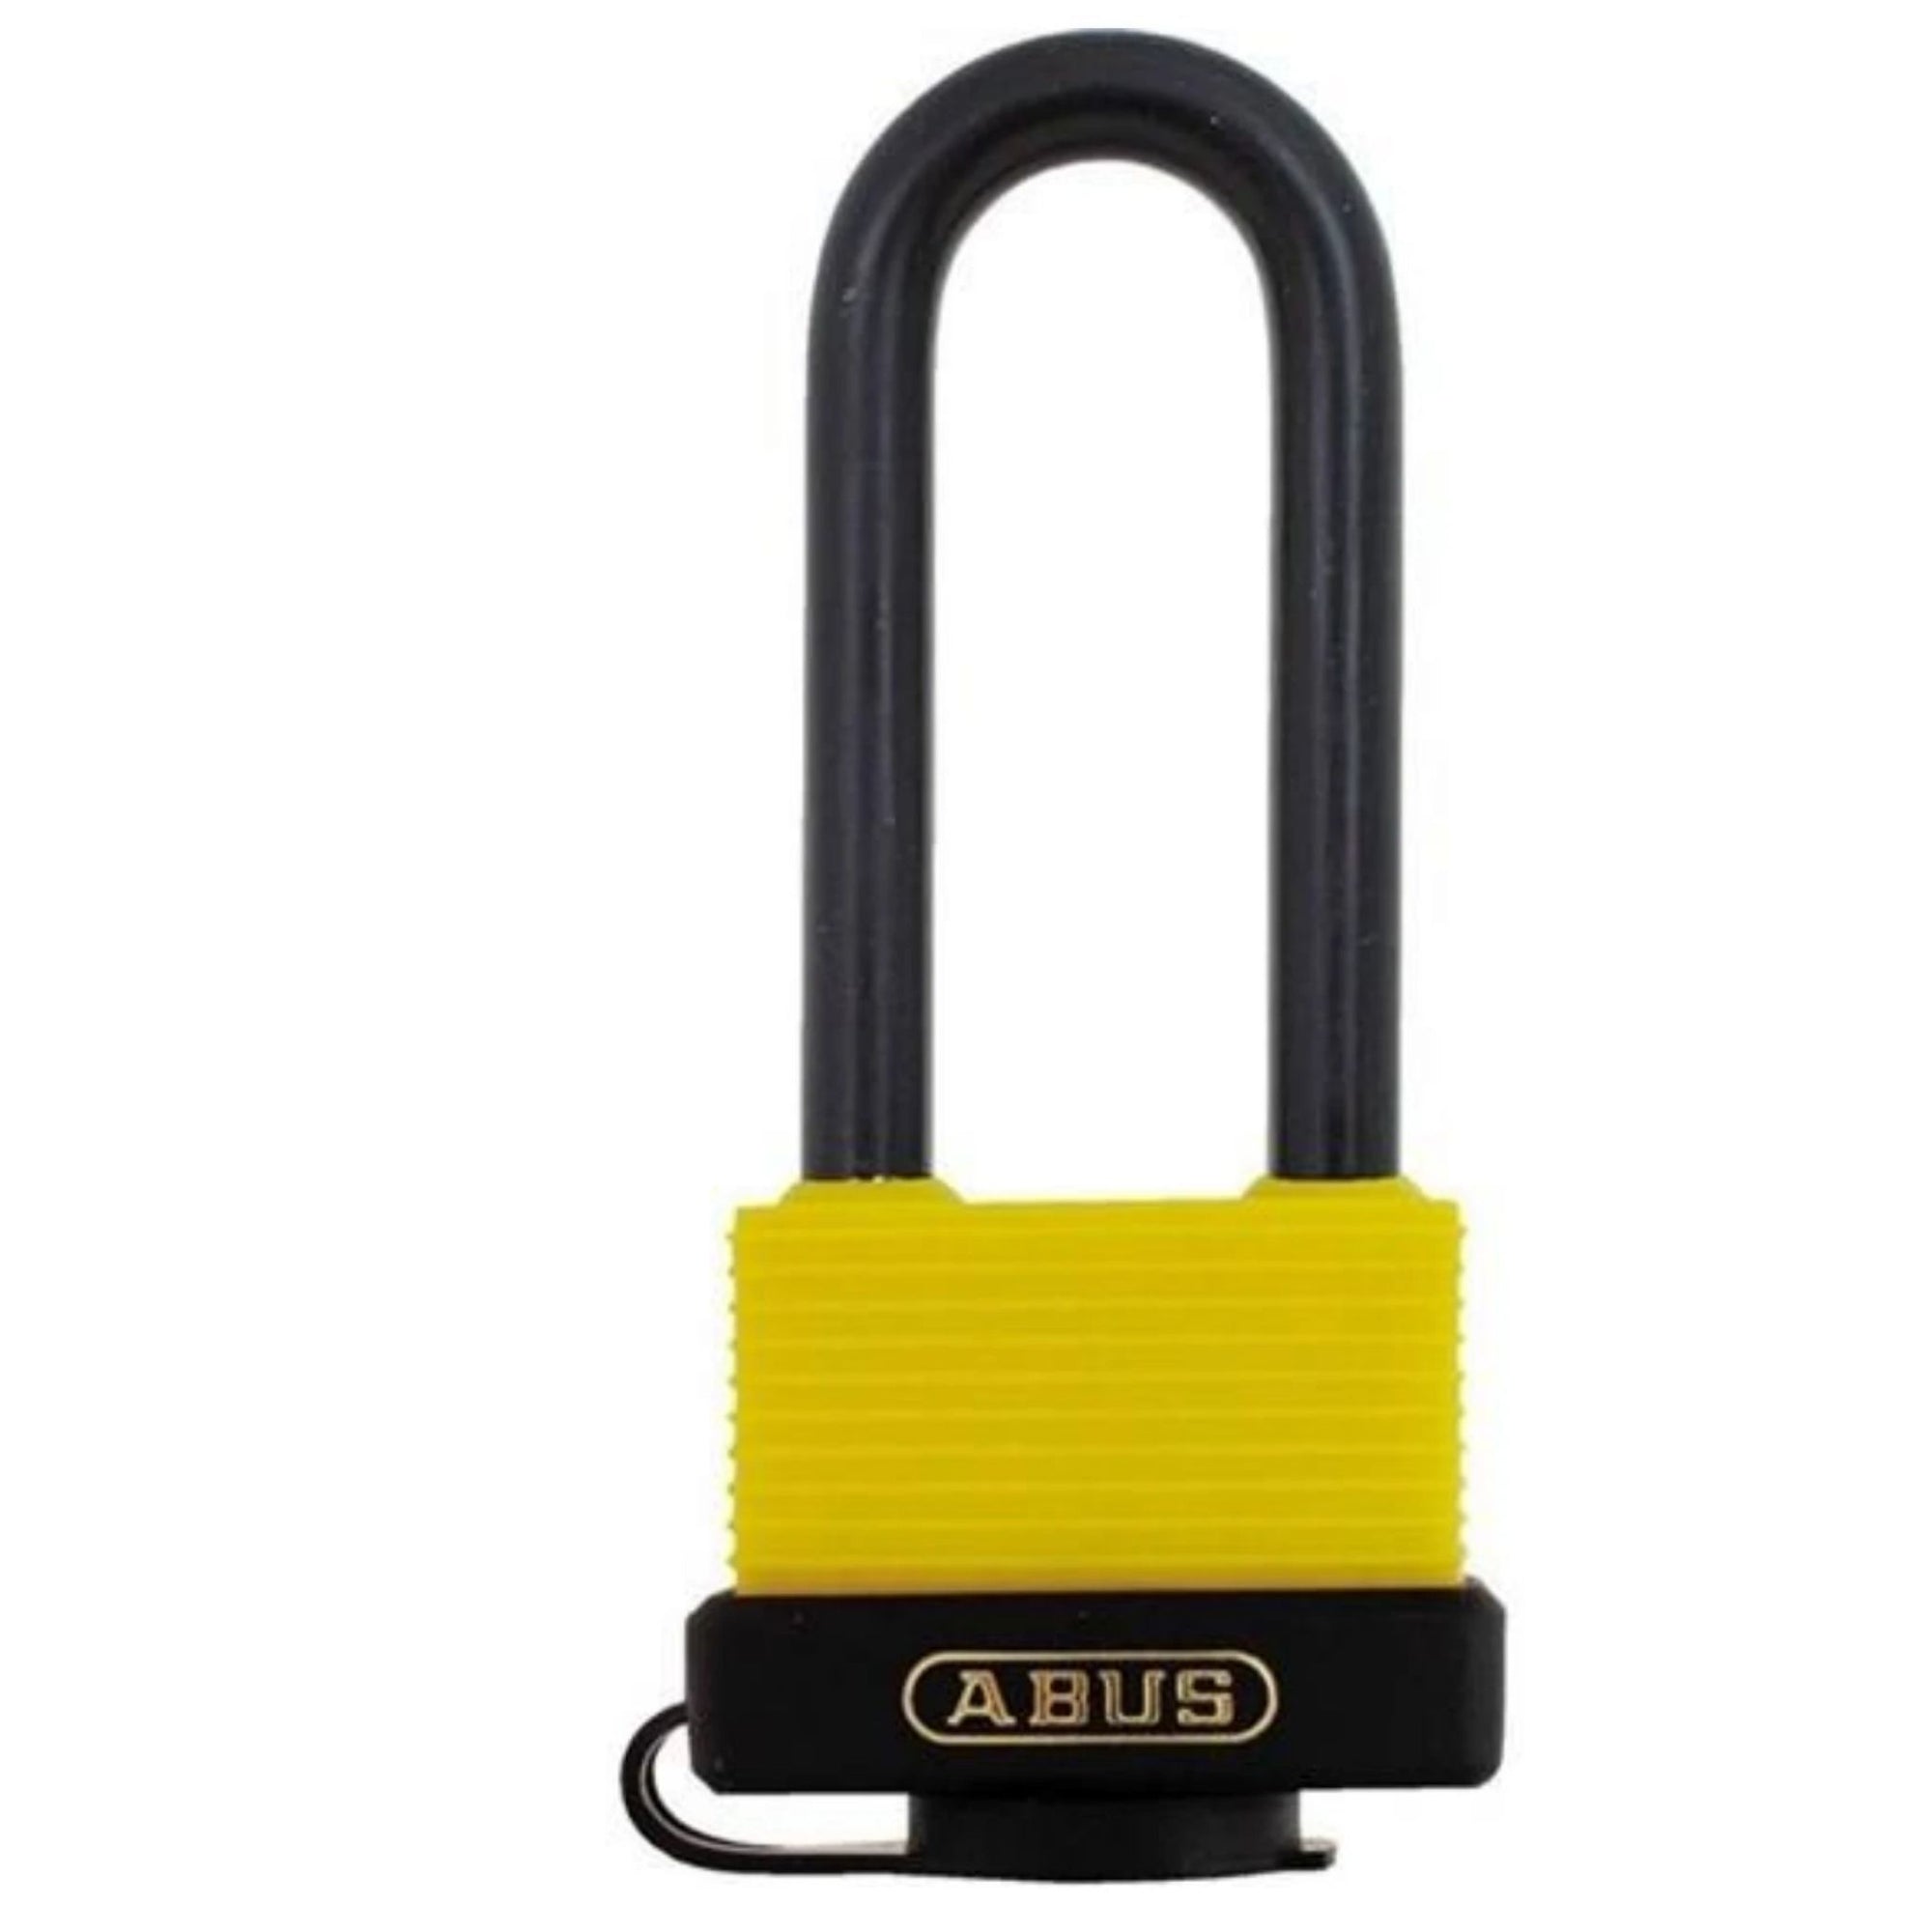 Abus 70/45HB63 KA 6404 Lock Keyed Alike Weatherproof Brass Padlocks with 2.5-Inch Shackle Keyed Alike to Match Key Number KA6404 - The Lock Source